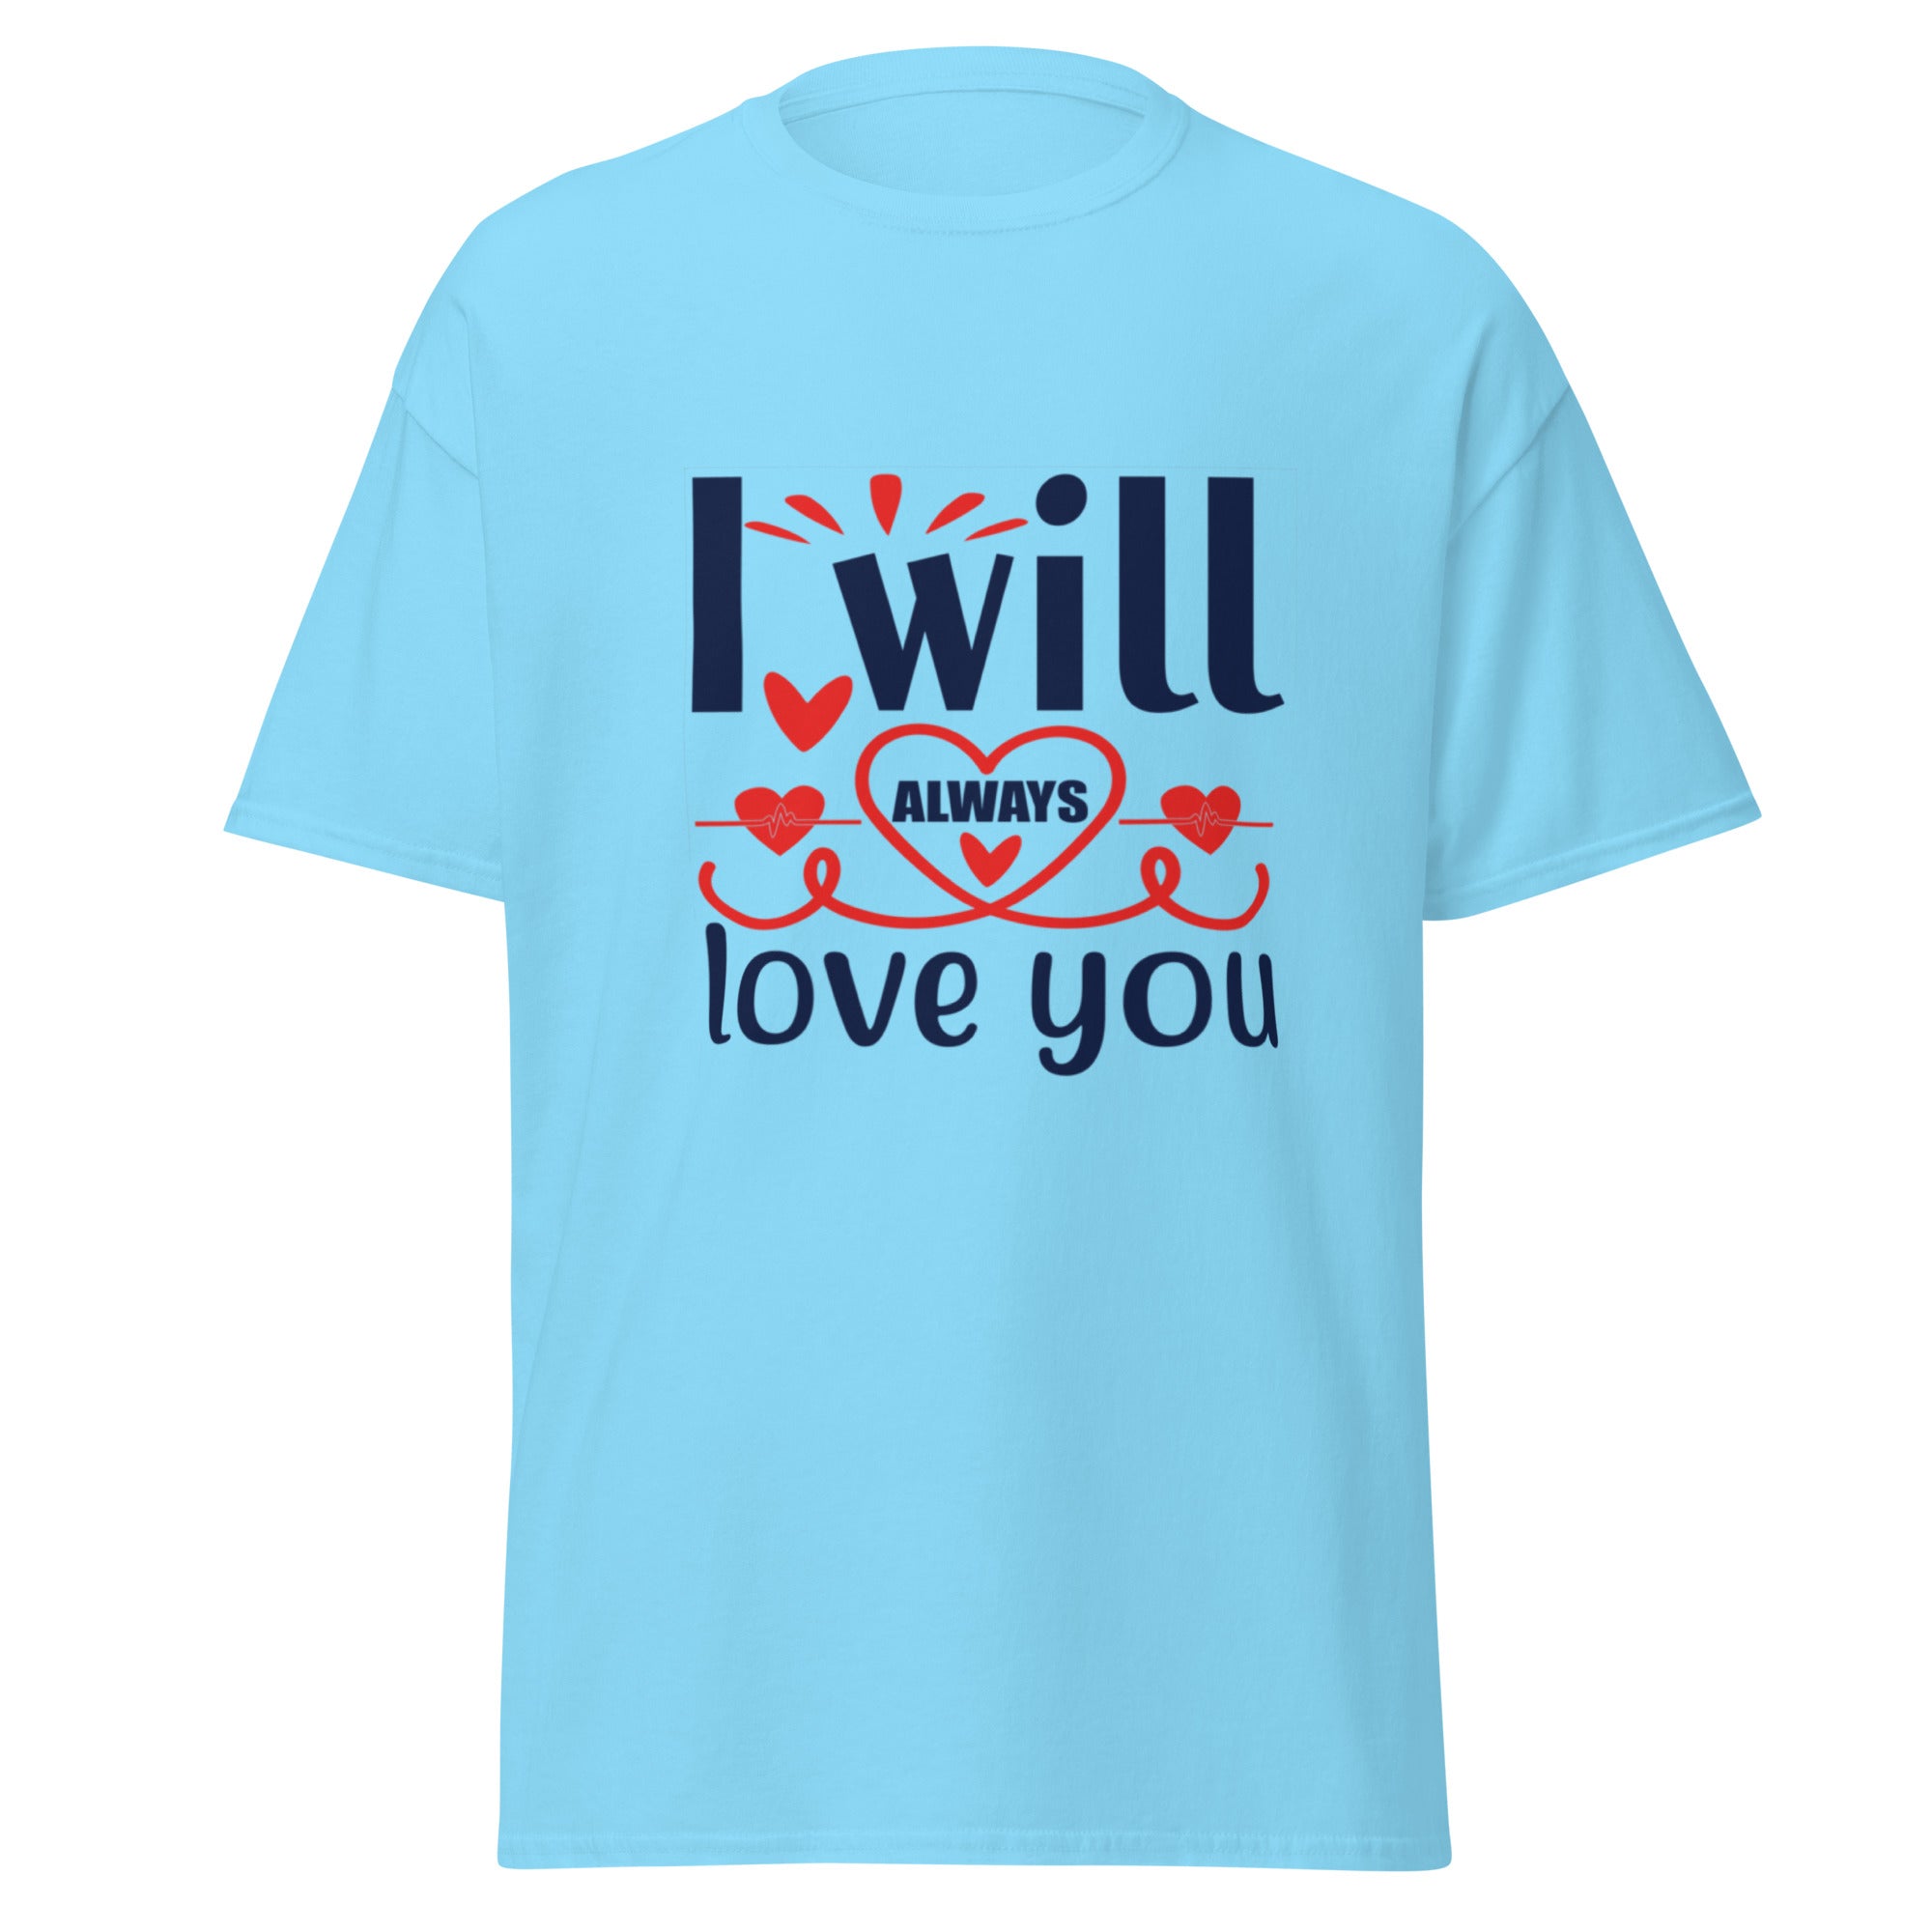 I will always love you - Romantic T-shirt - Romantic Birthday Gifts for Boyfriend